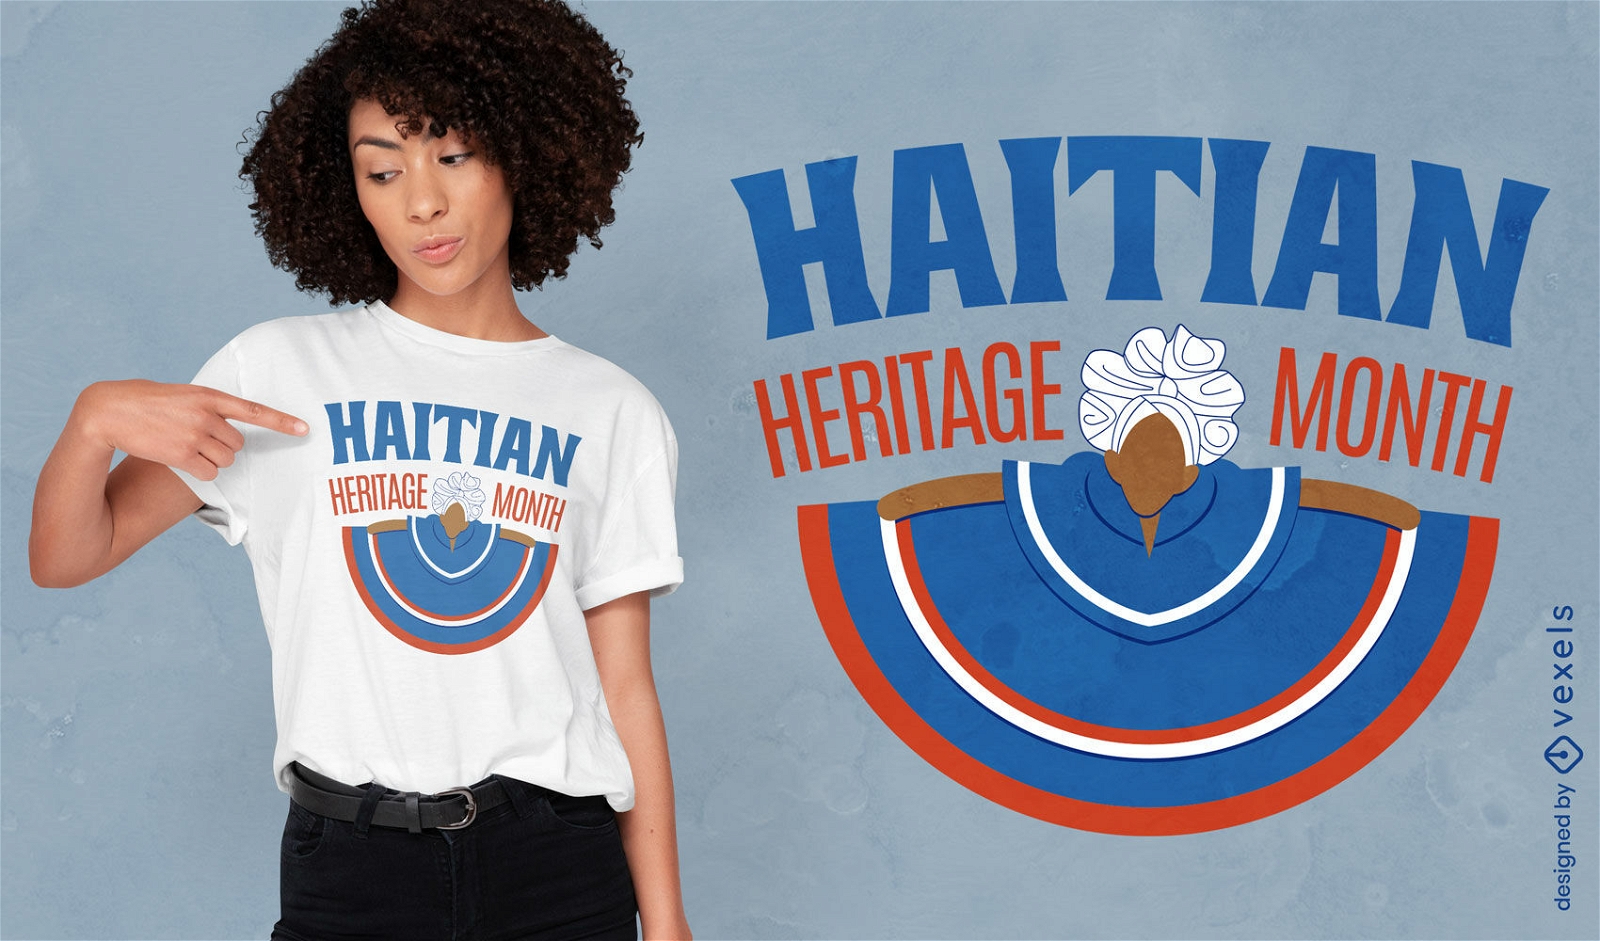 Dise?o de camiseta del mes de la herencia haitiana.